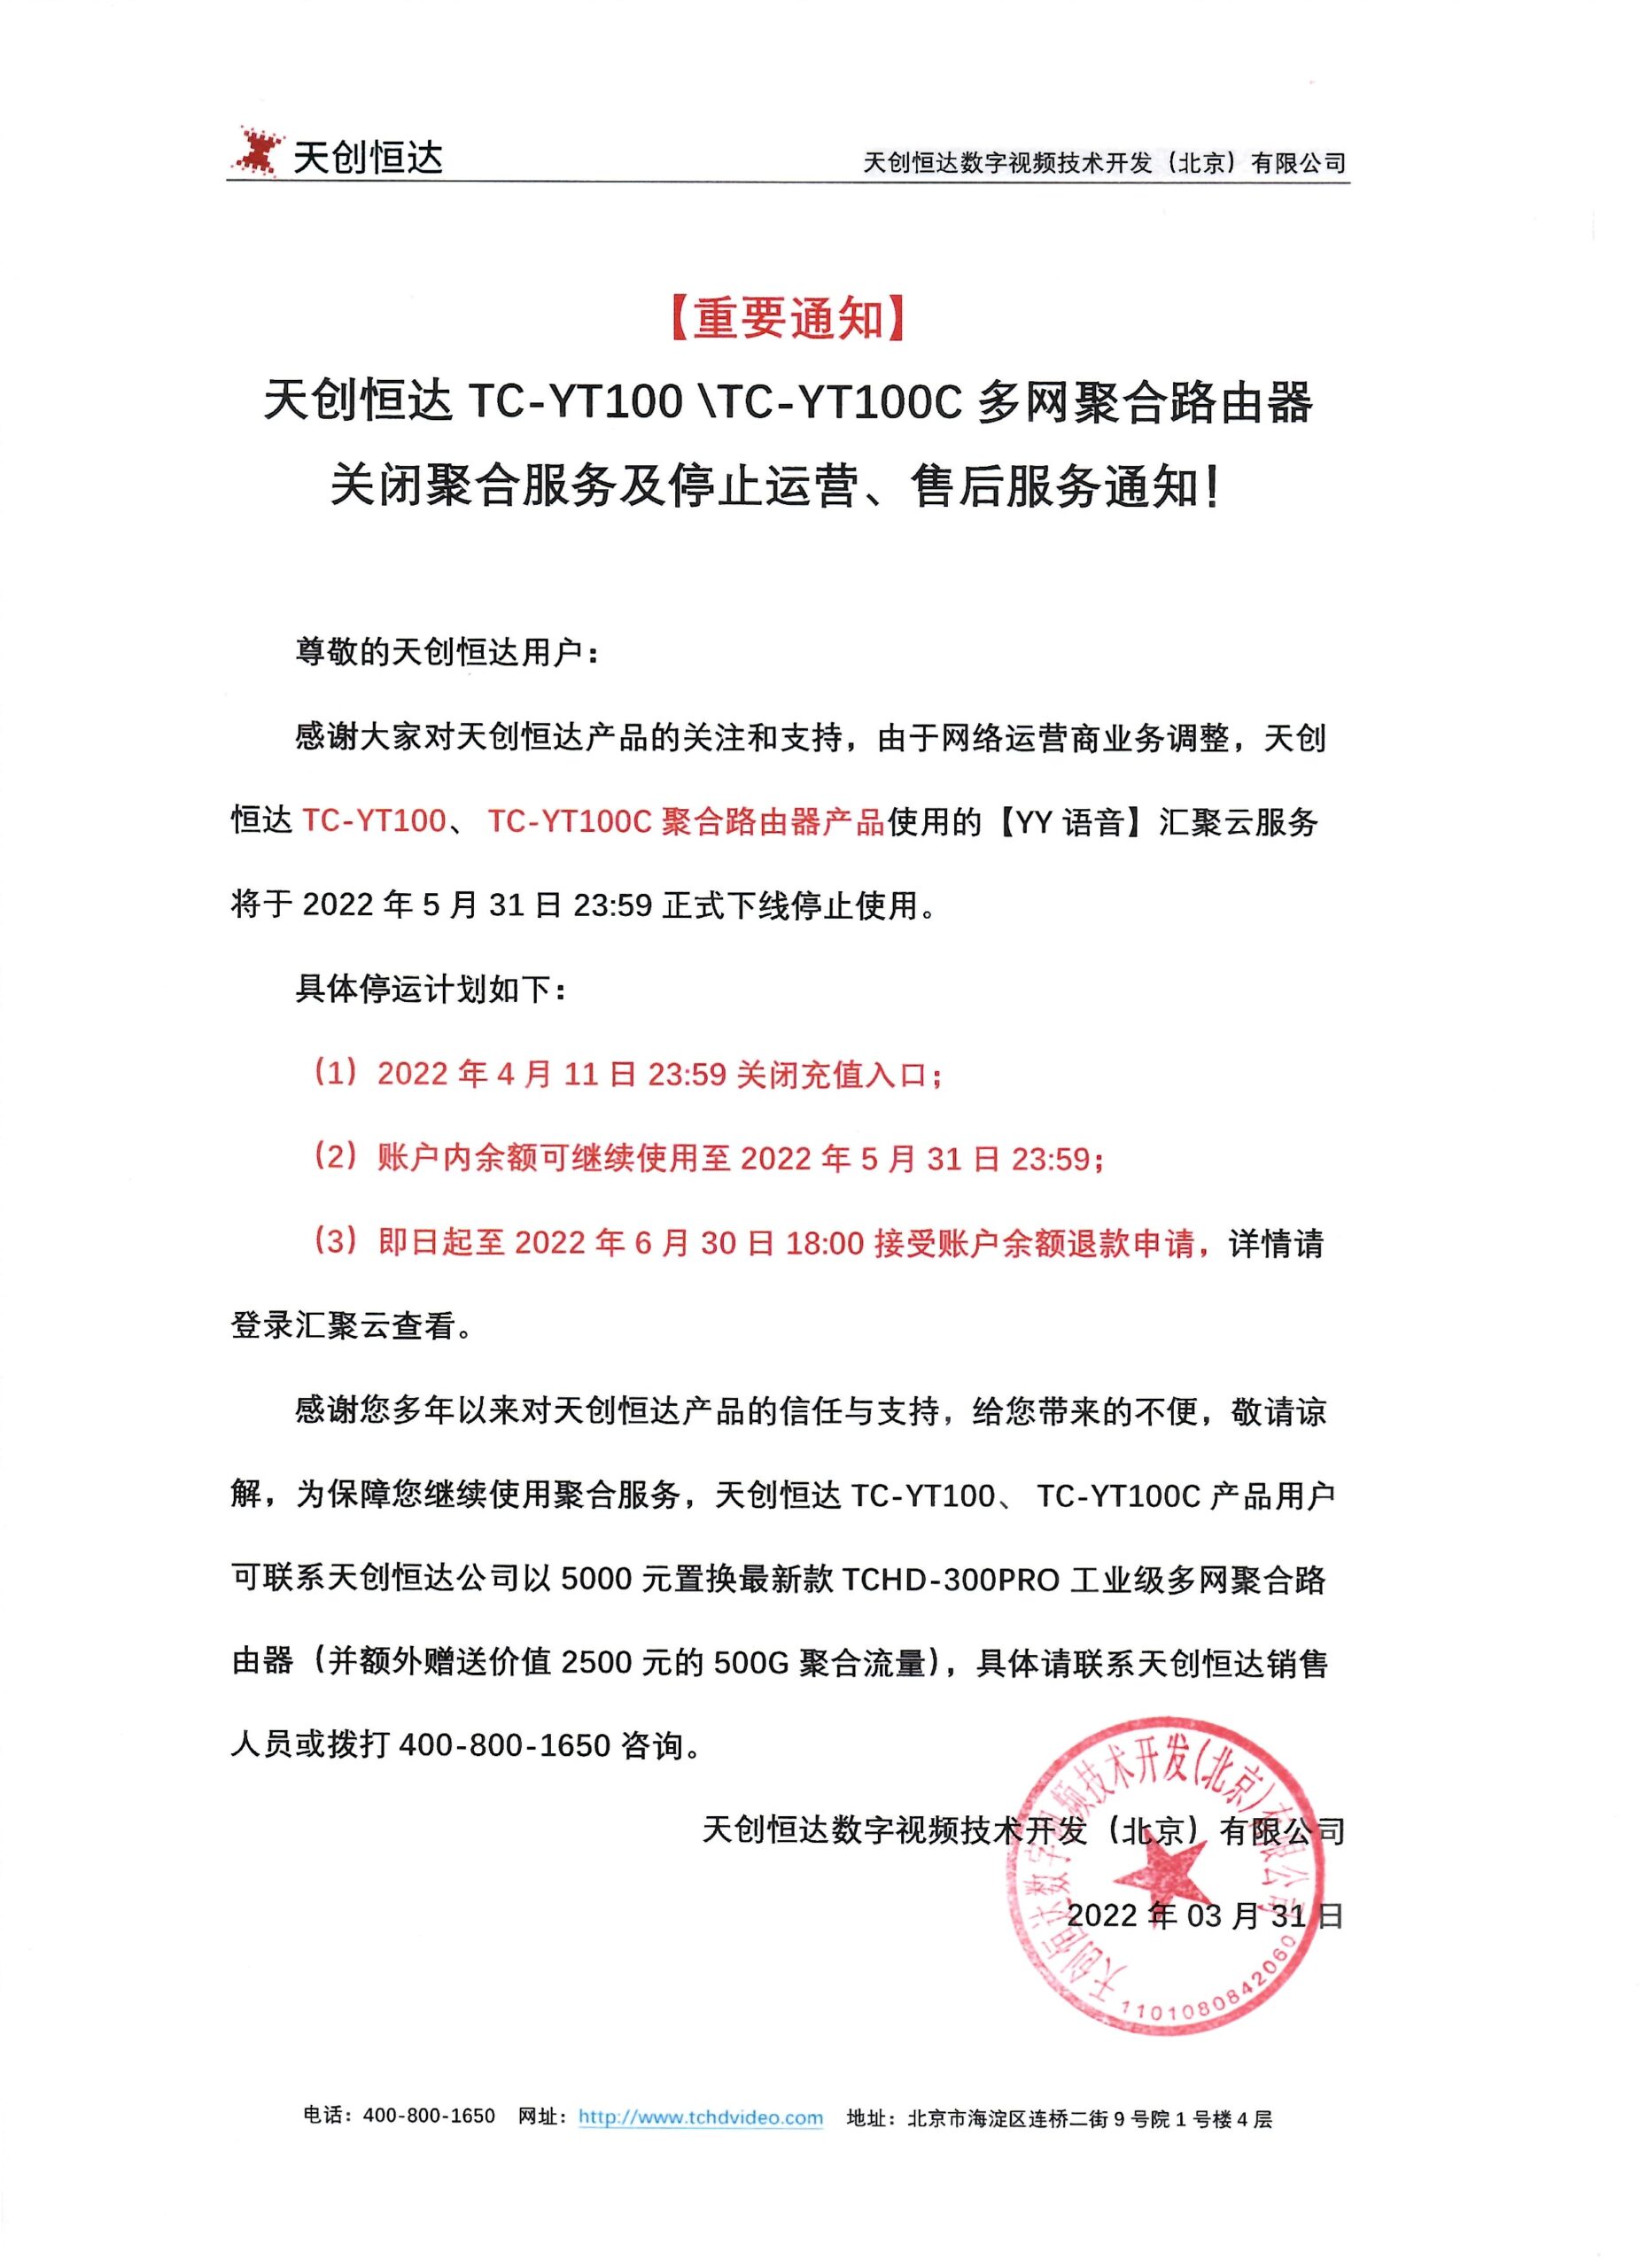 TC-YT100\TC-YT100C多网聚合路由器关闭聚合服务及停止运营、售后服务通知！